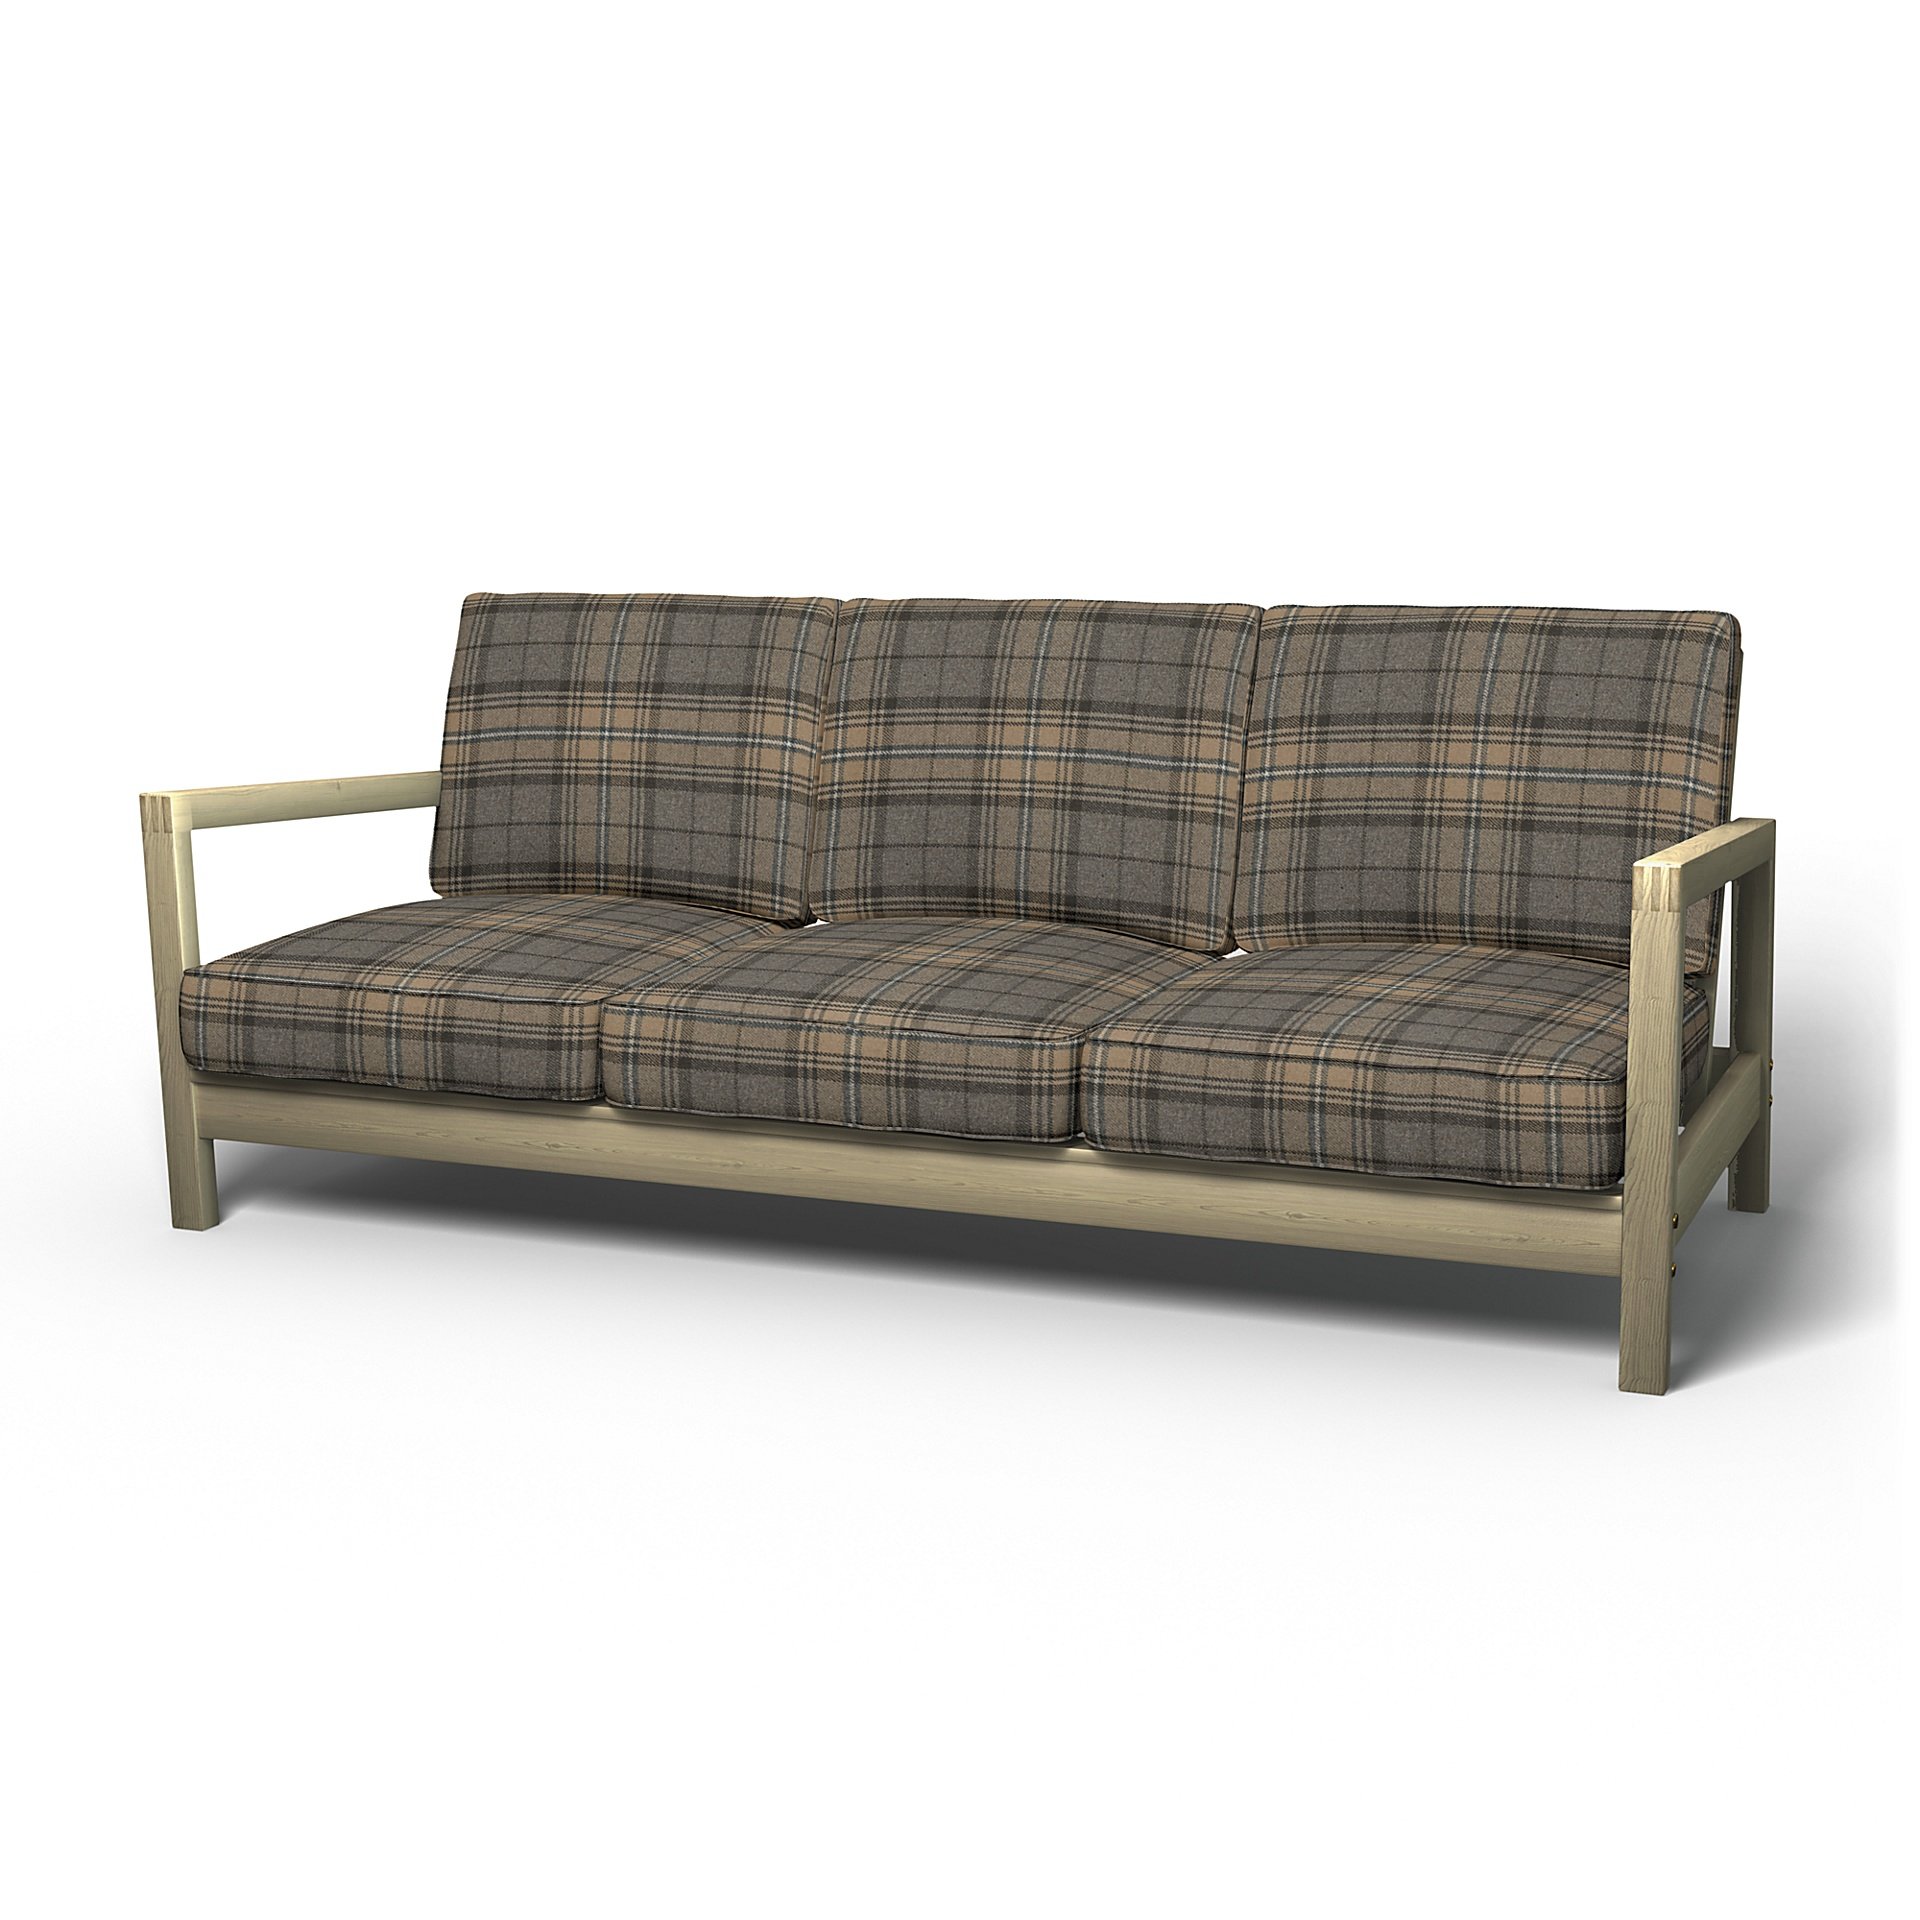 IKEA - Lillberg 3 Seater Sofa Cover, Bark Brown, Wool - Bemz